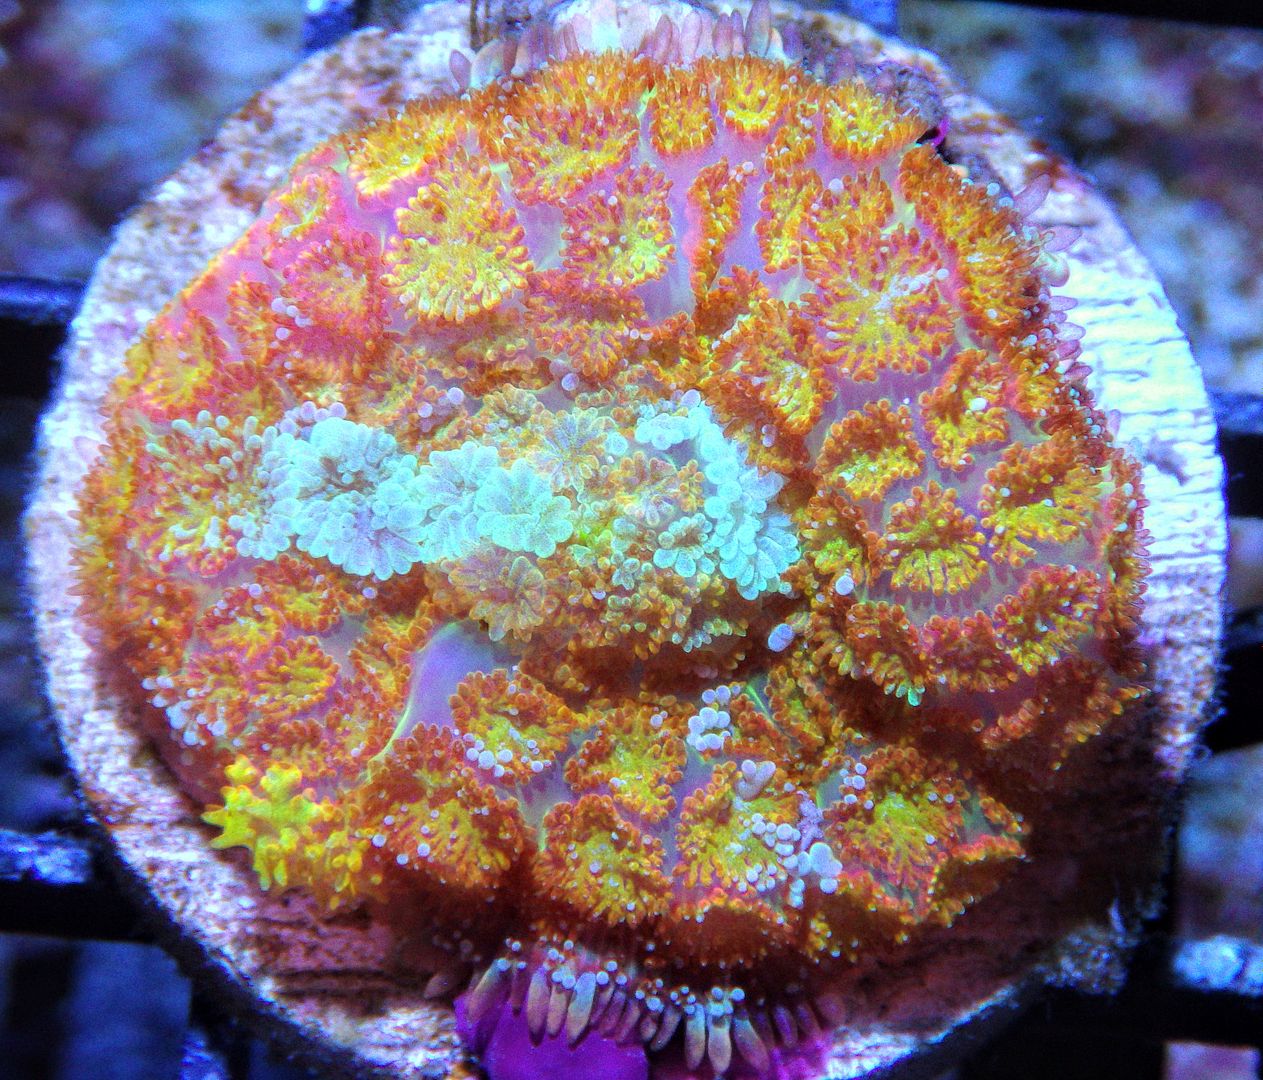 RIMG85892 zpsv82gkuib - New Mushrooms & Pieces of The Reef